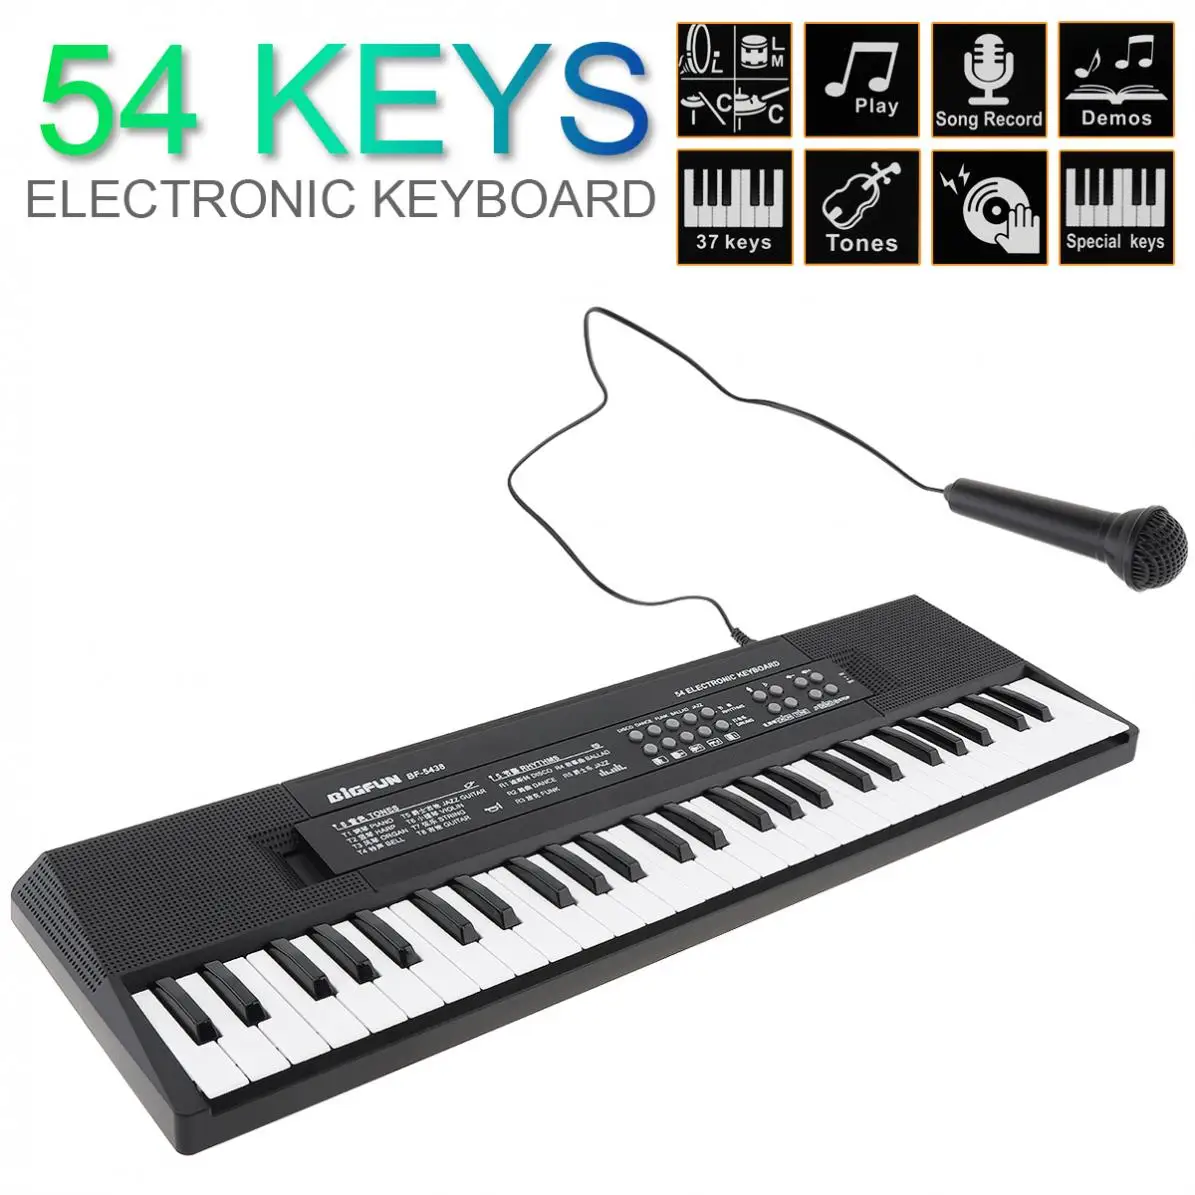 54 Keys Electronic Keyboard with Microphone